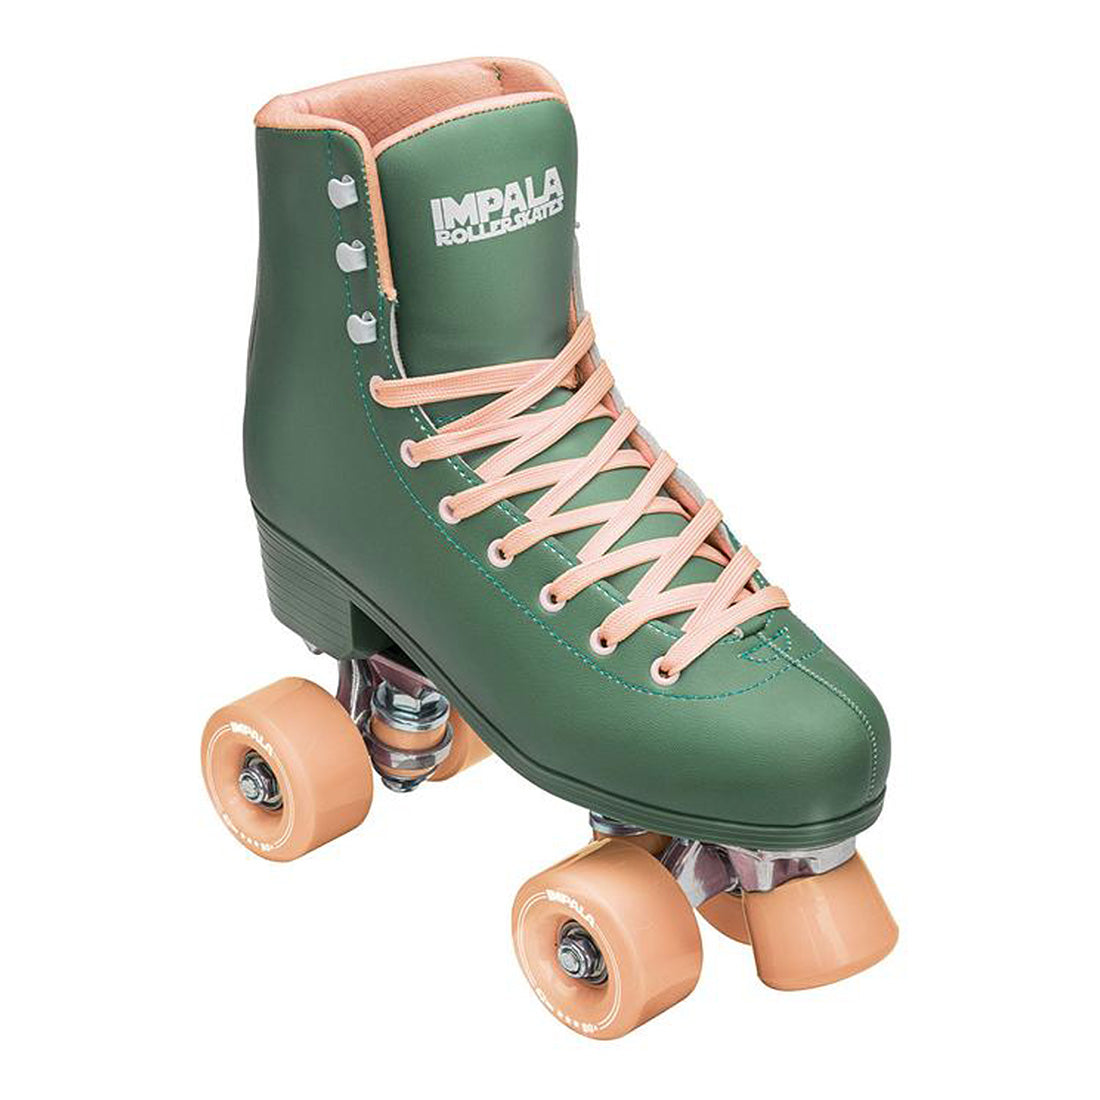 Impala Sidewalk - Forest Green Roller Skates